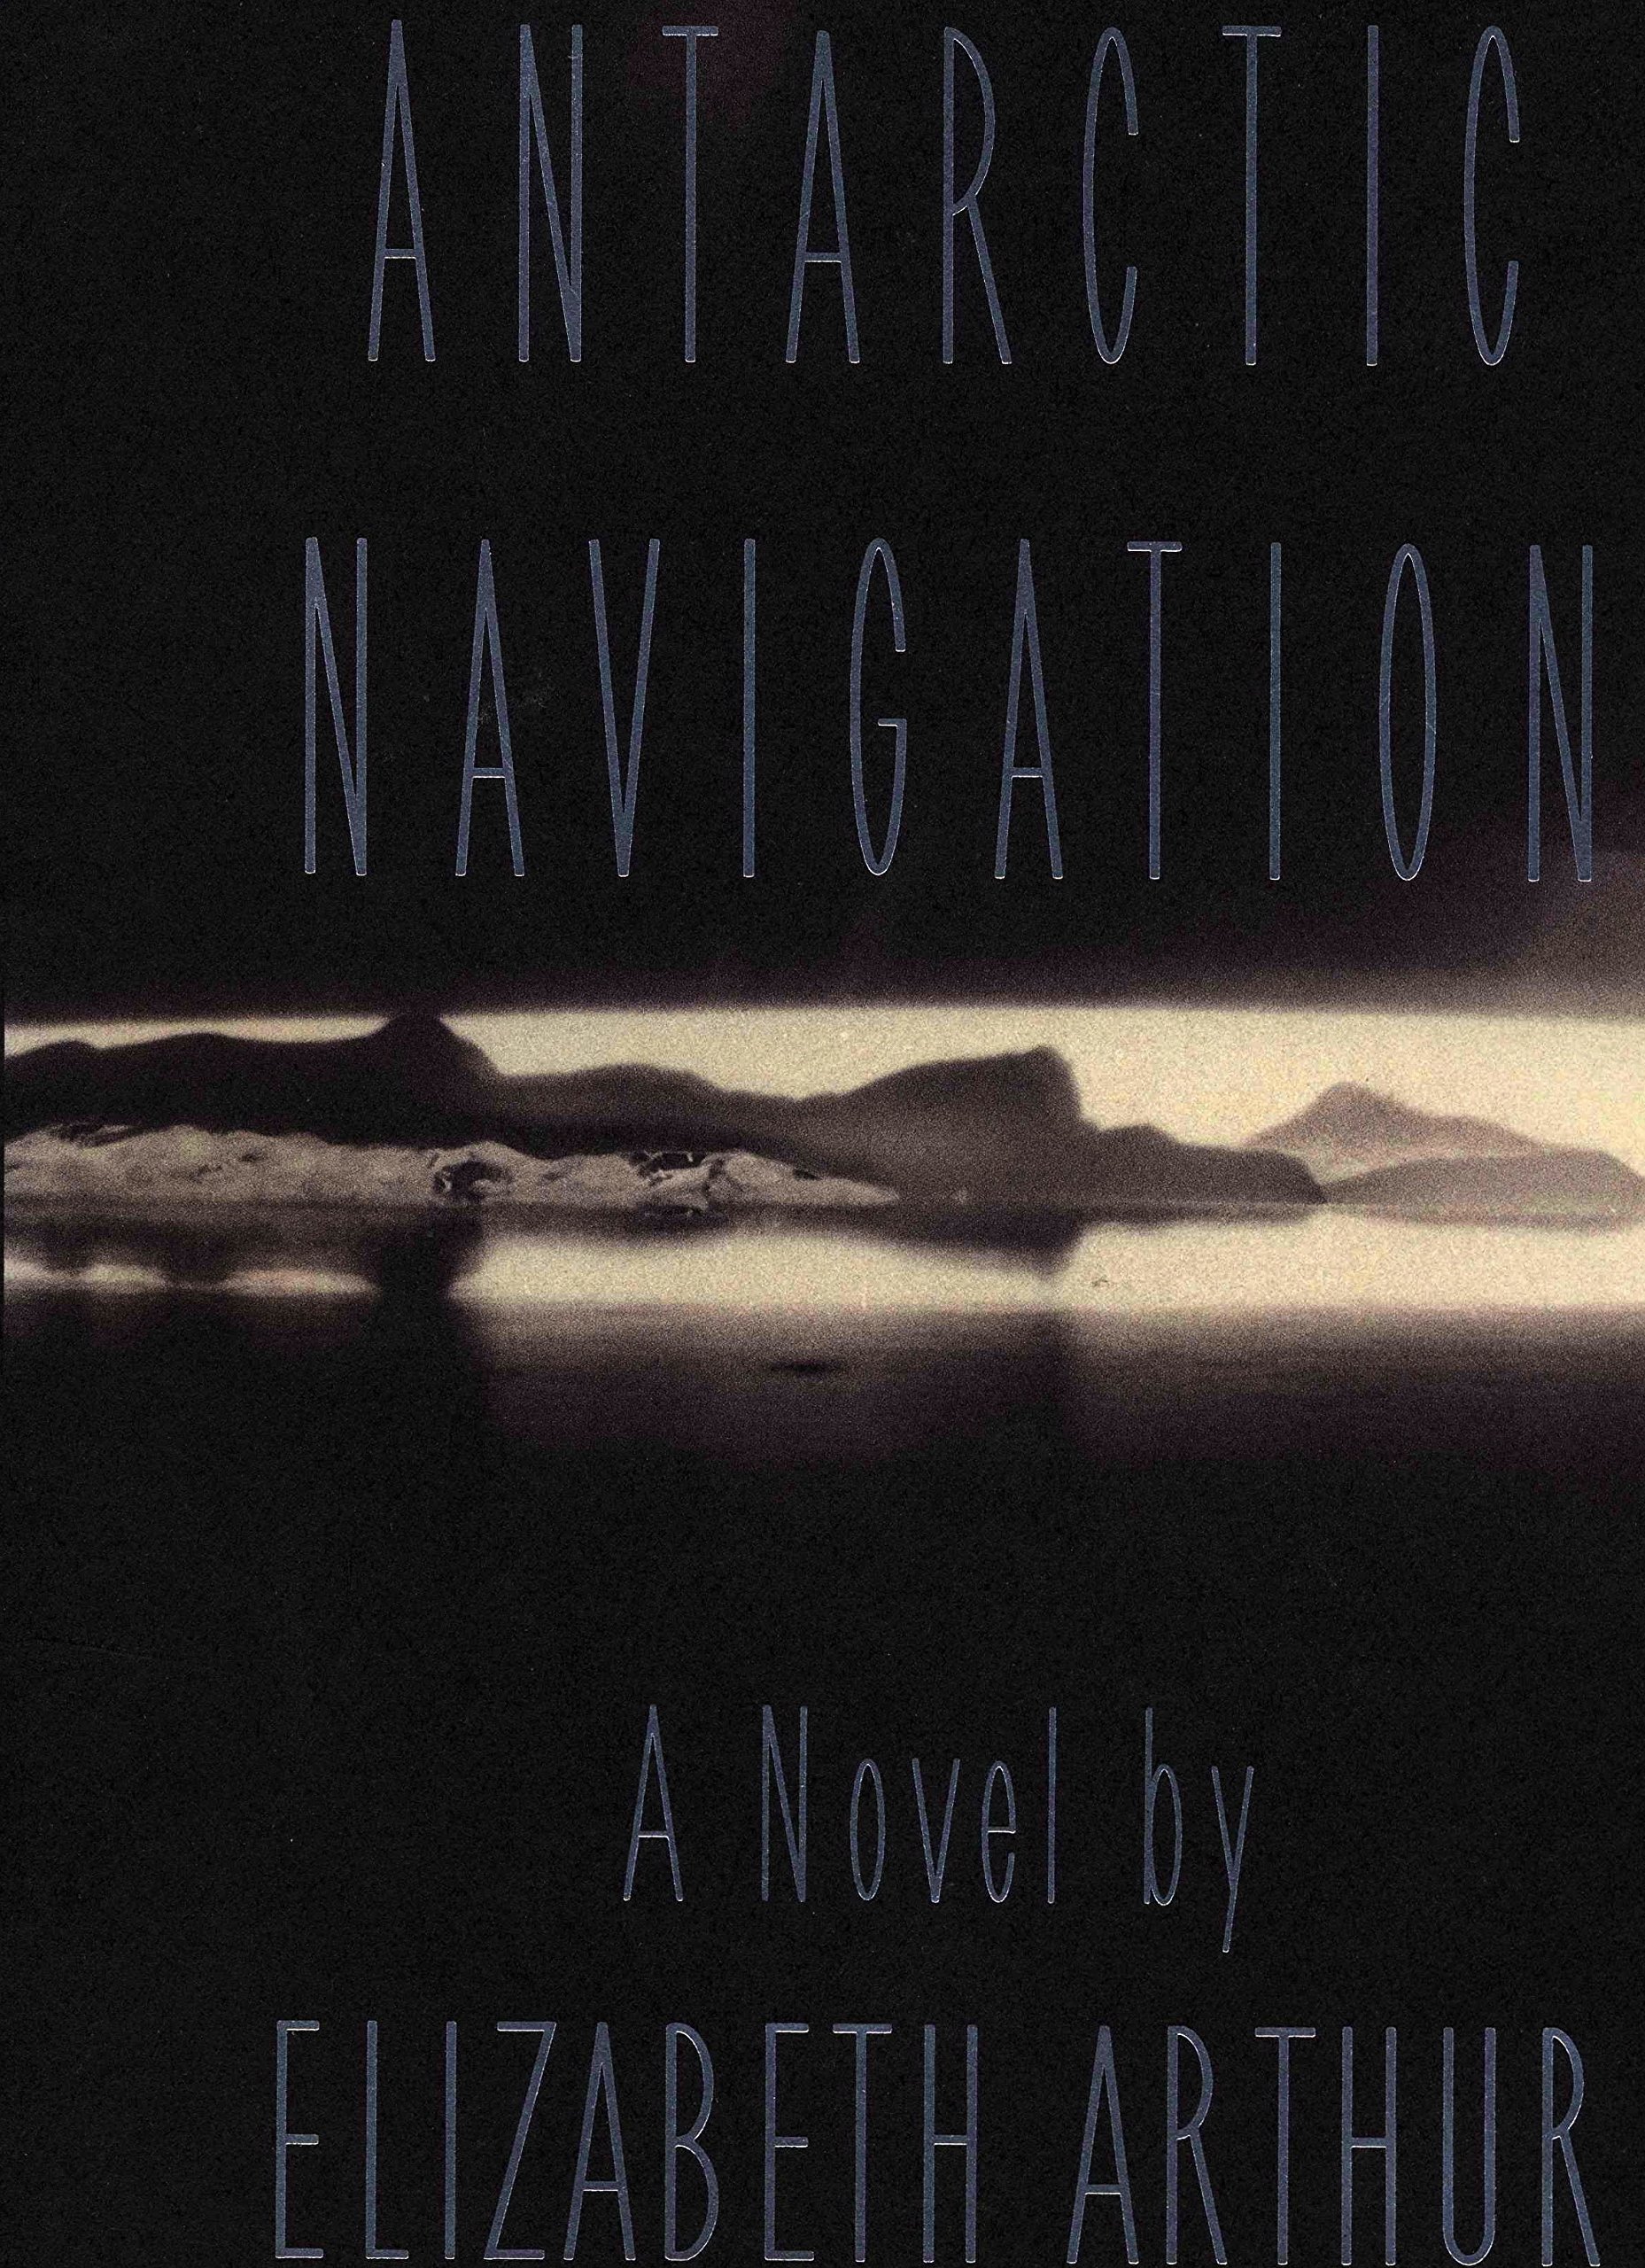 Antarctic Navigation: A Novel